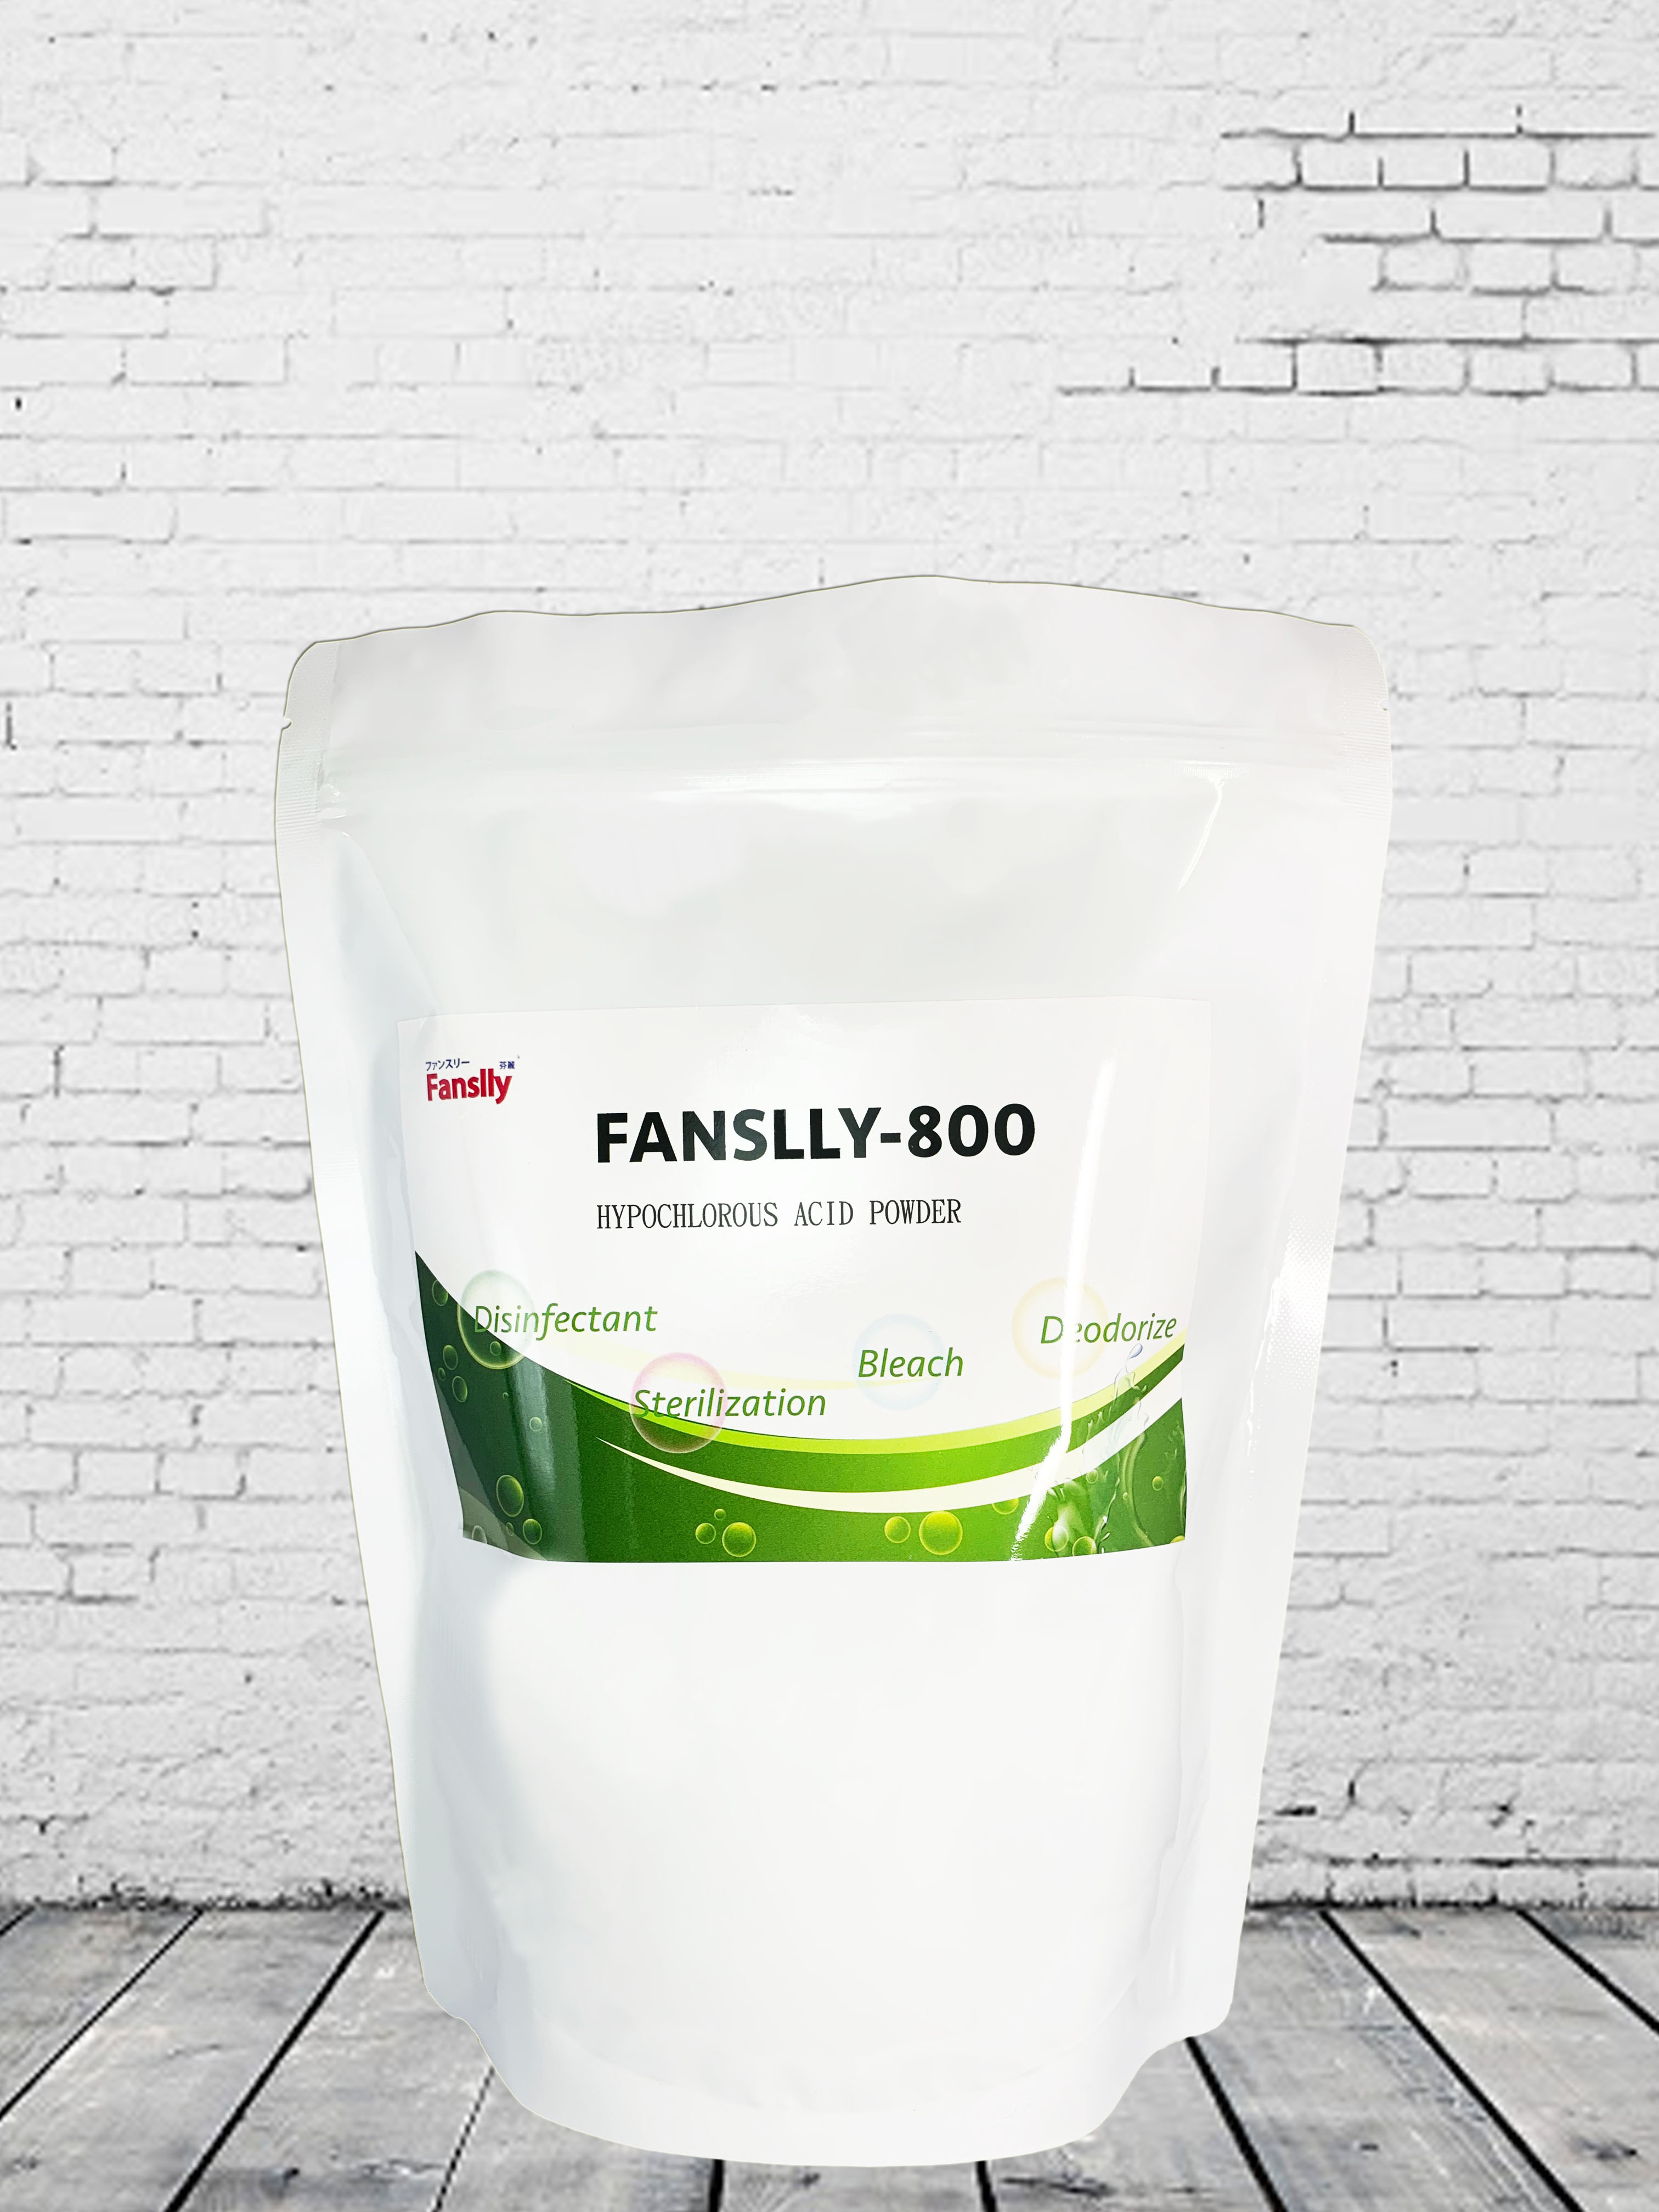 Fanslly-800 500 grams per pack